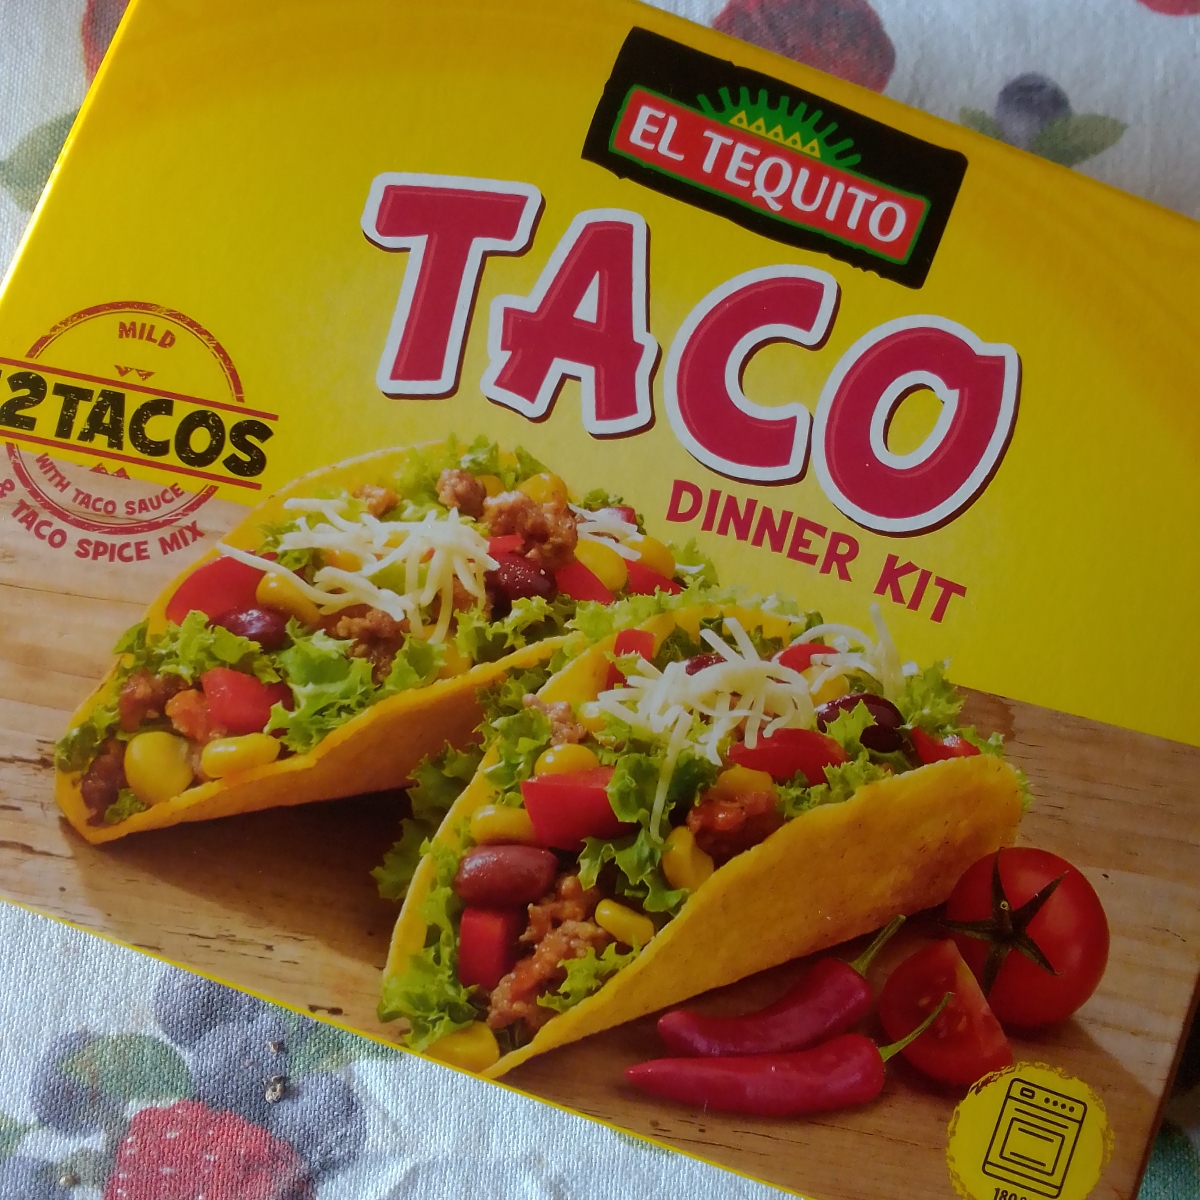 | Tequito Kit Taco abillion Review El Dinner